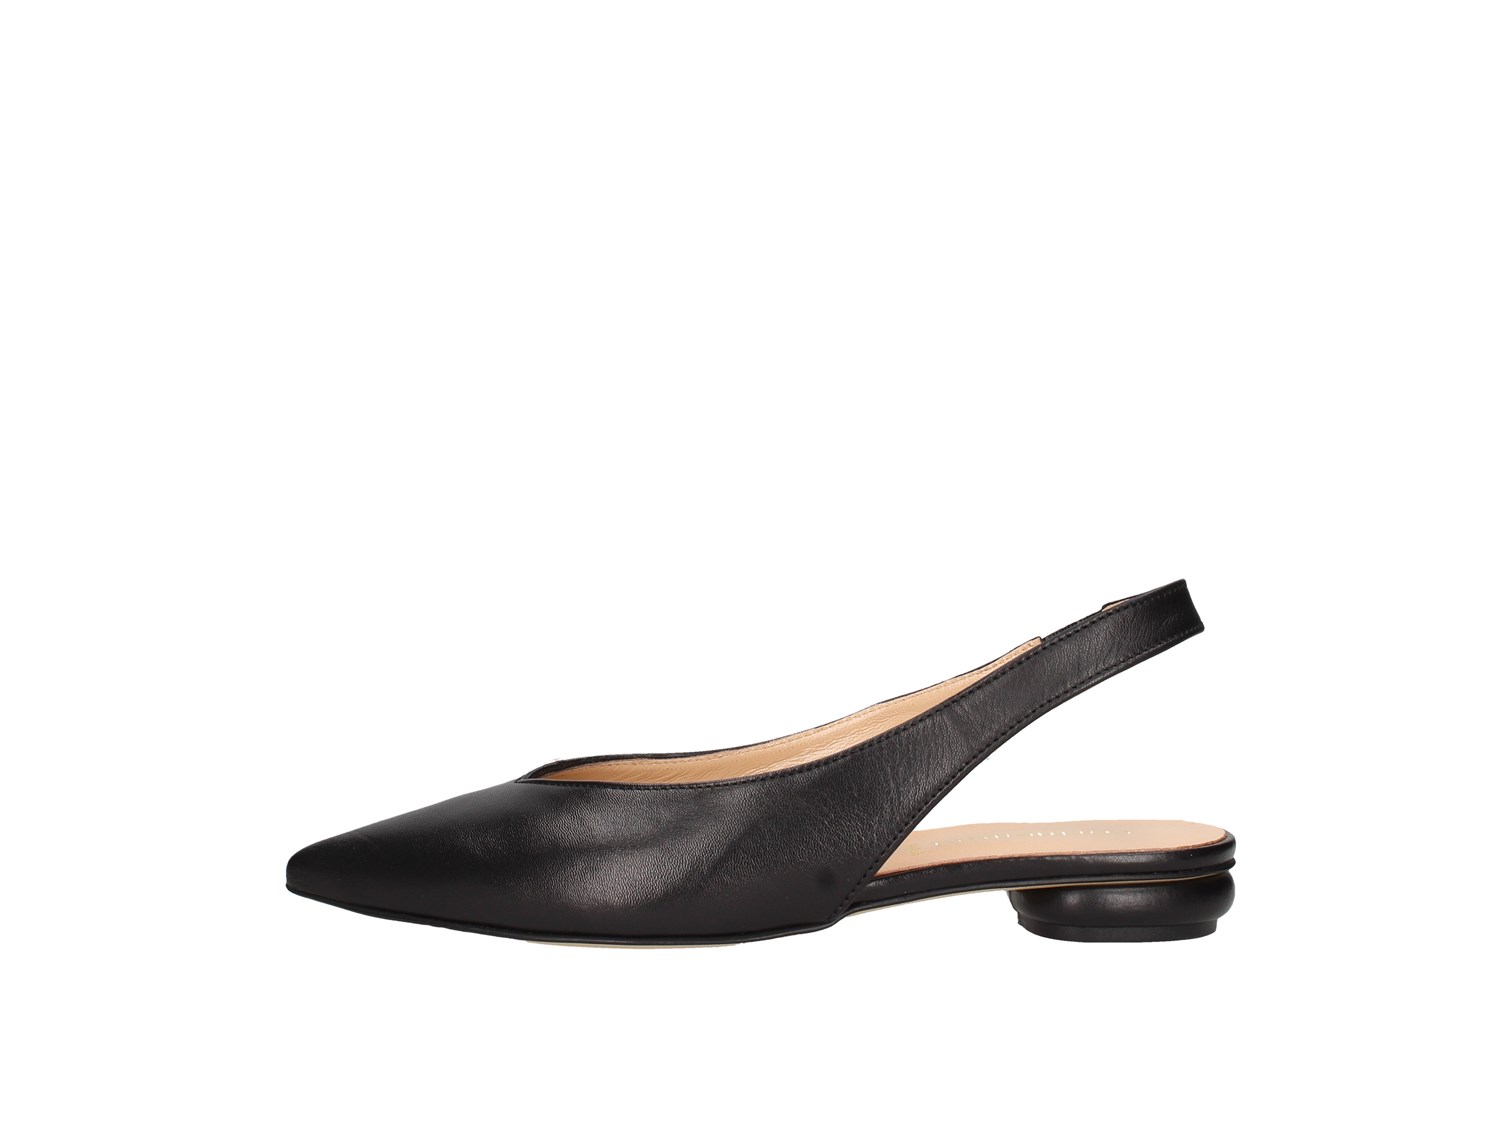 Formentini Se1101 Black Shoes Women Heels'